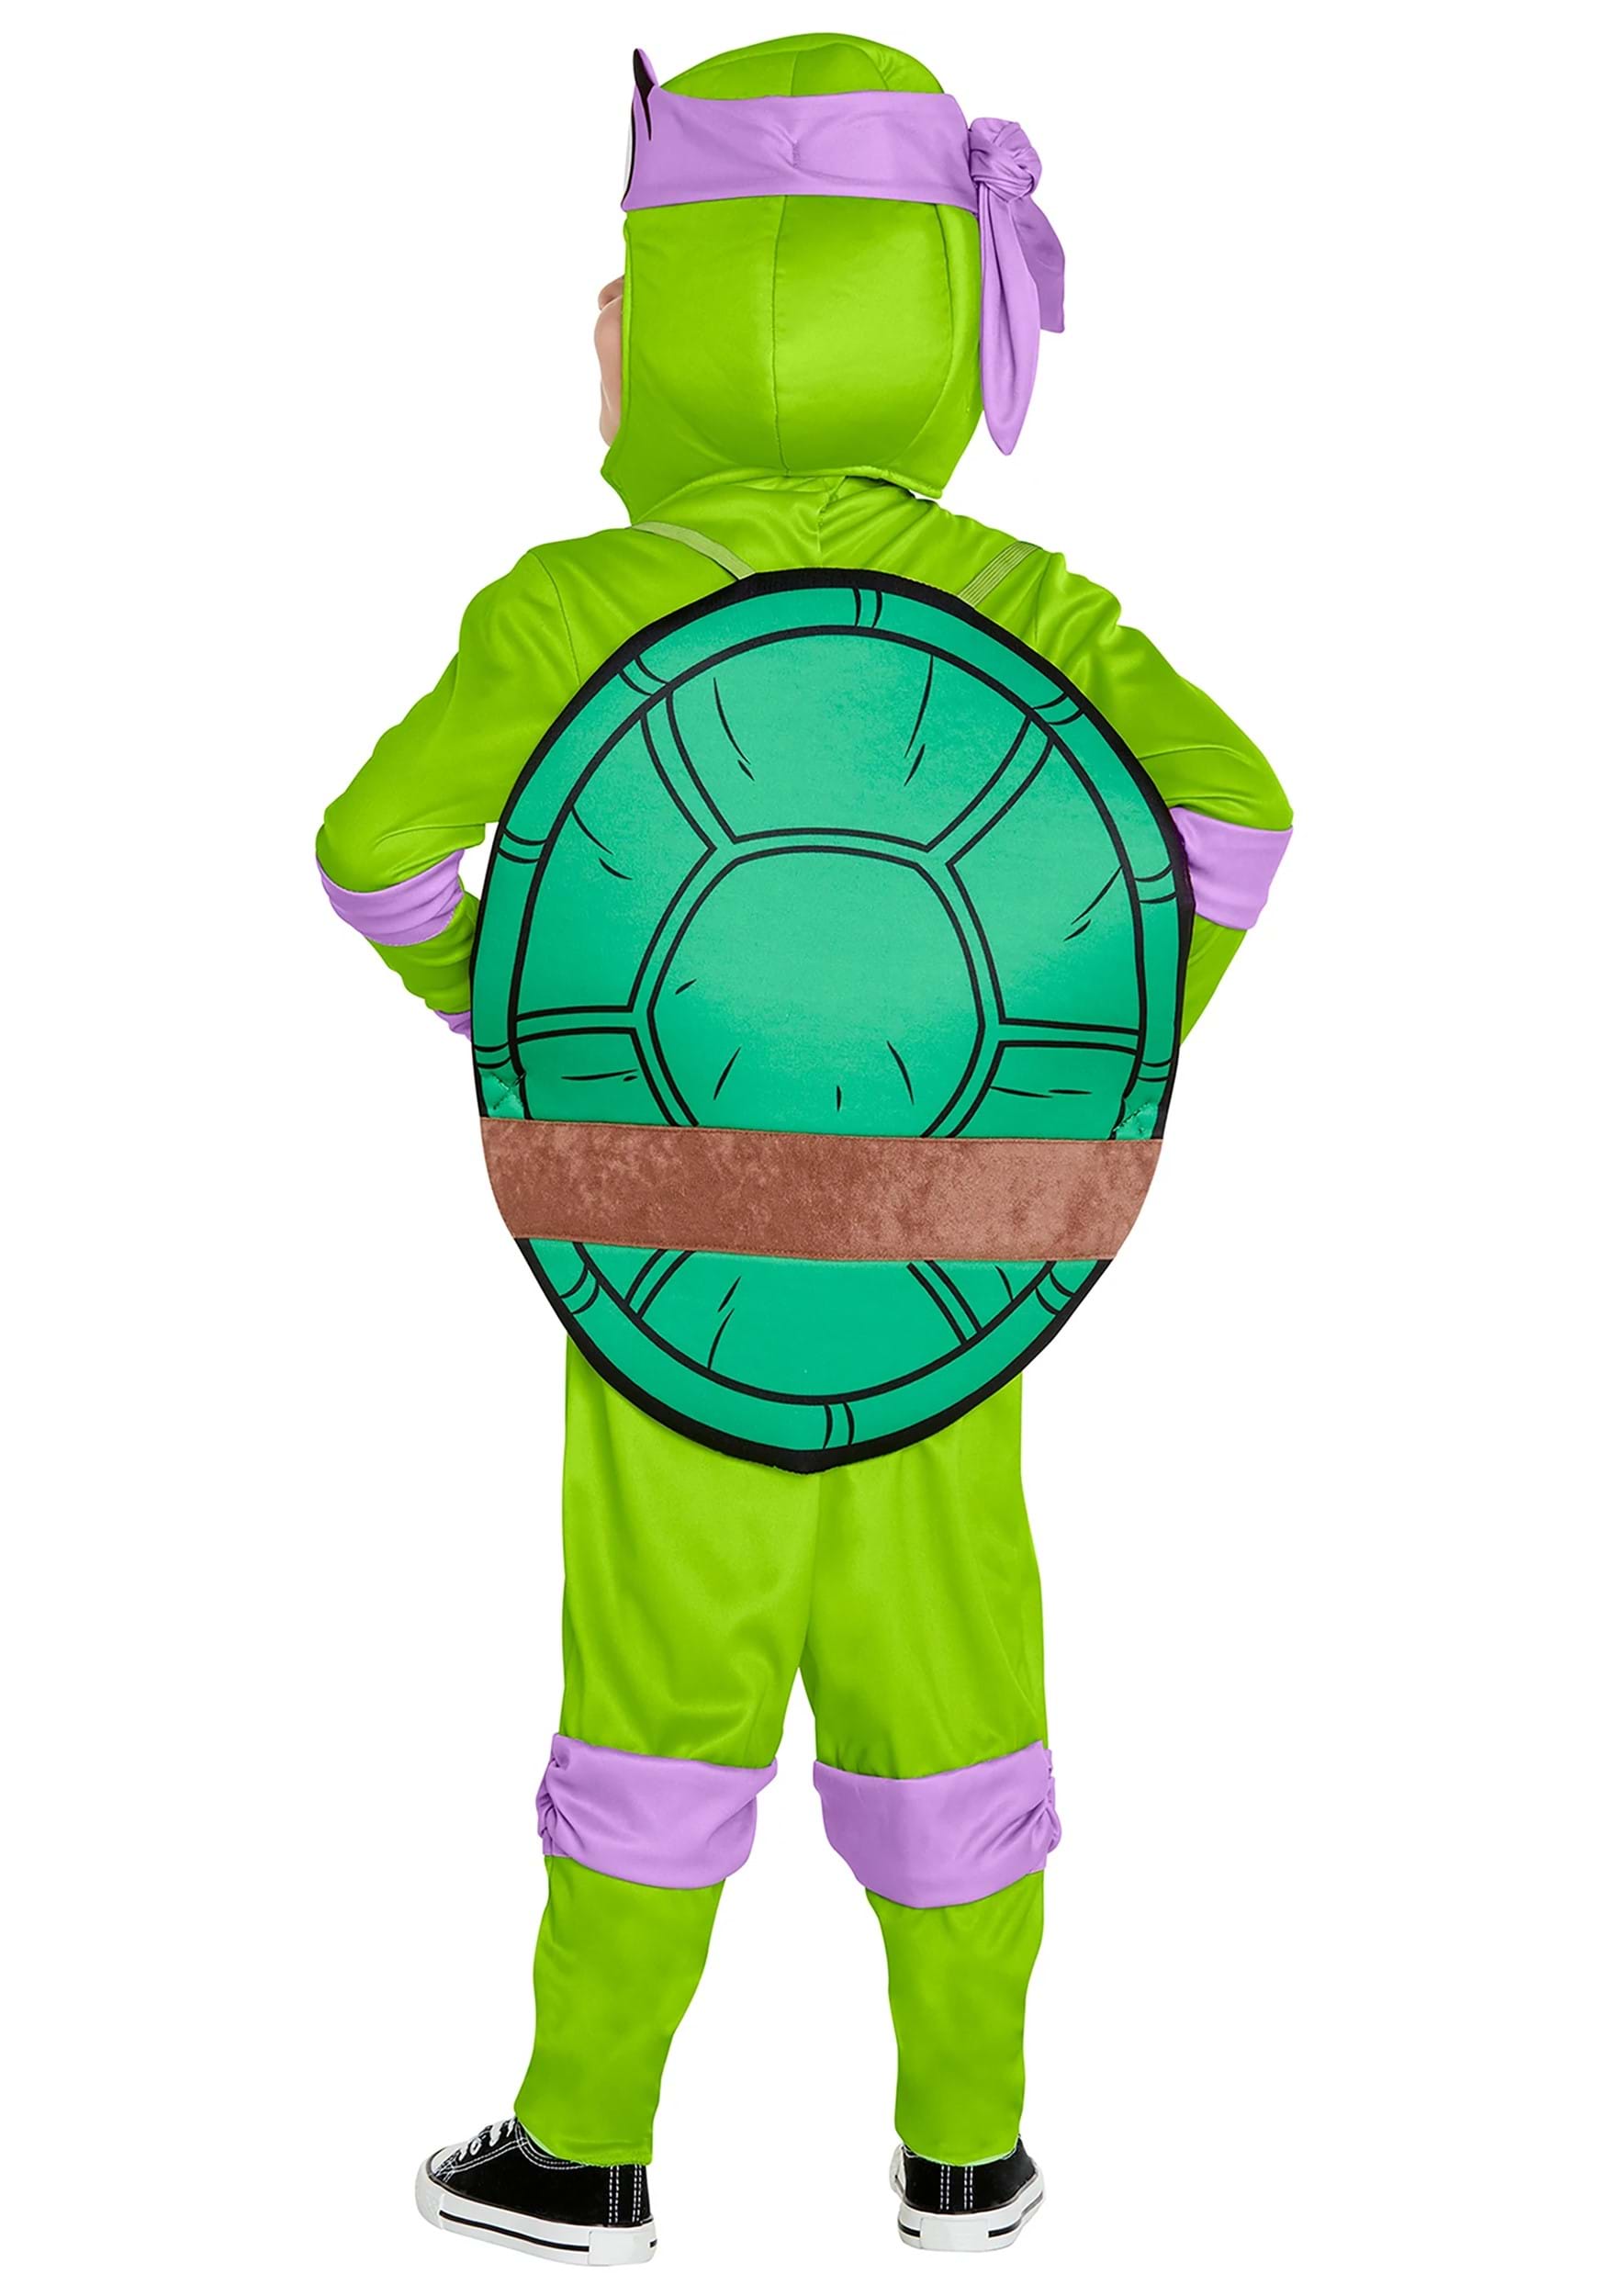 https://images.fun.com/products/85452/2-1-232815/kids-teenage-mutant-ninja-turtles-donatello-costume-alt-1.jpg